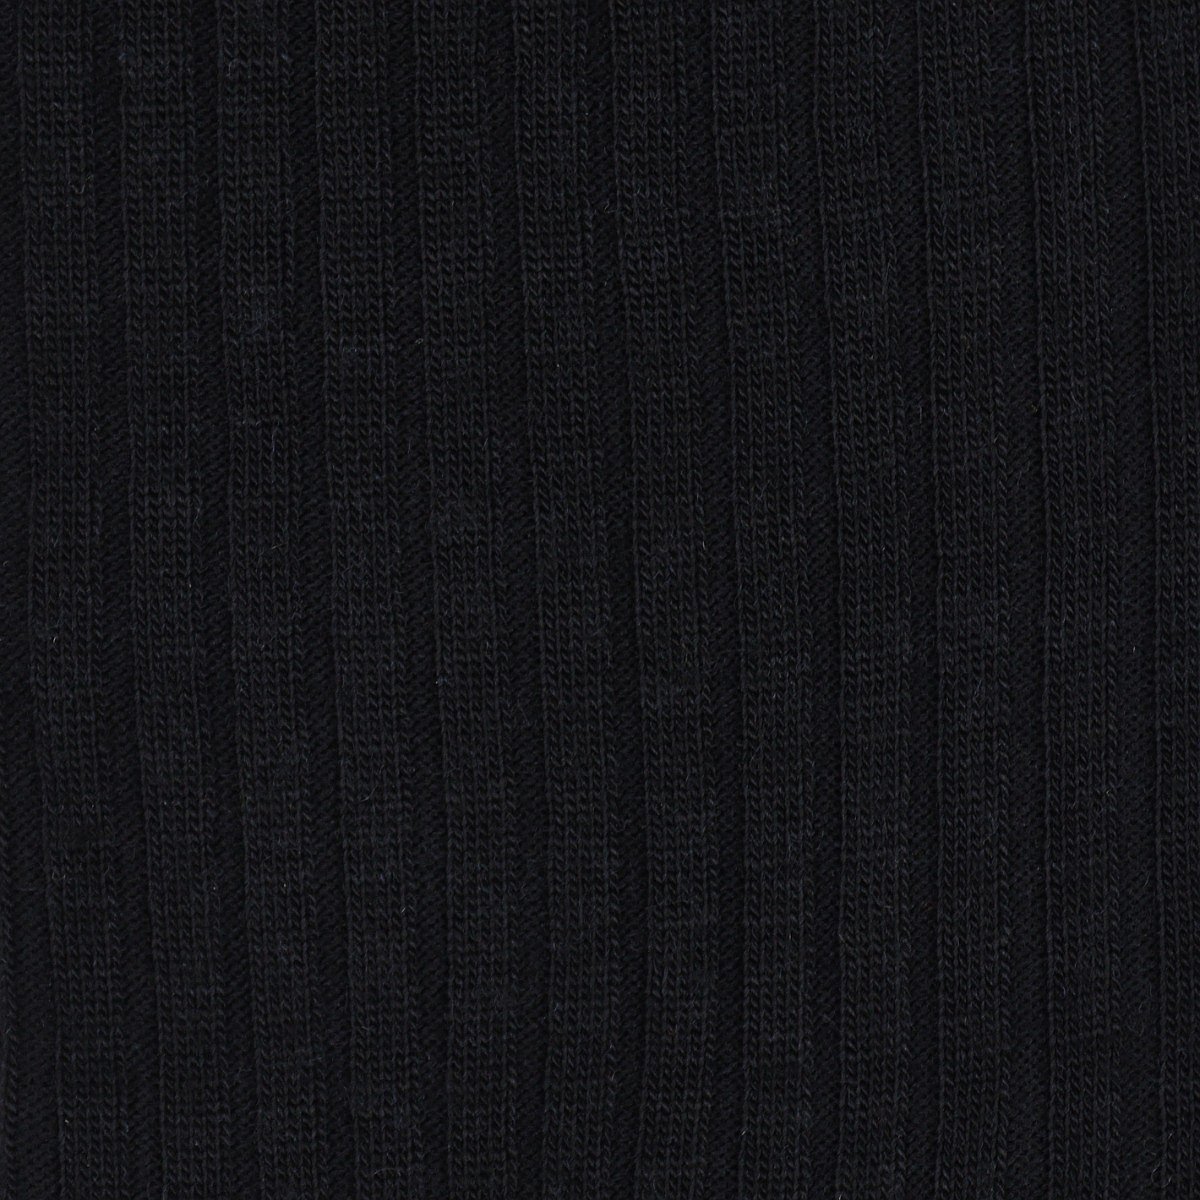 Pantherella Laburnum black ribbed merino wool men's socks